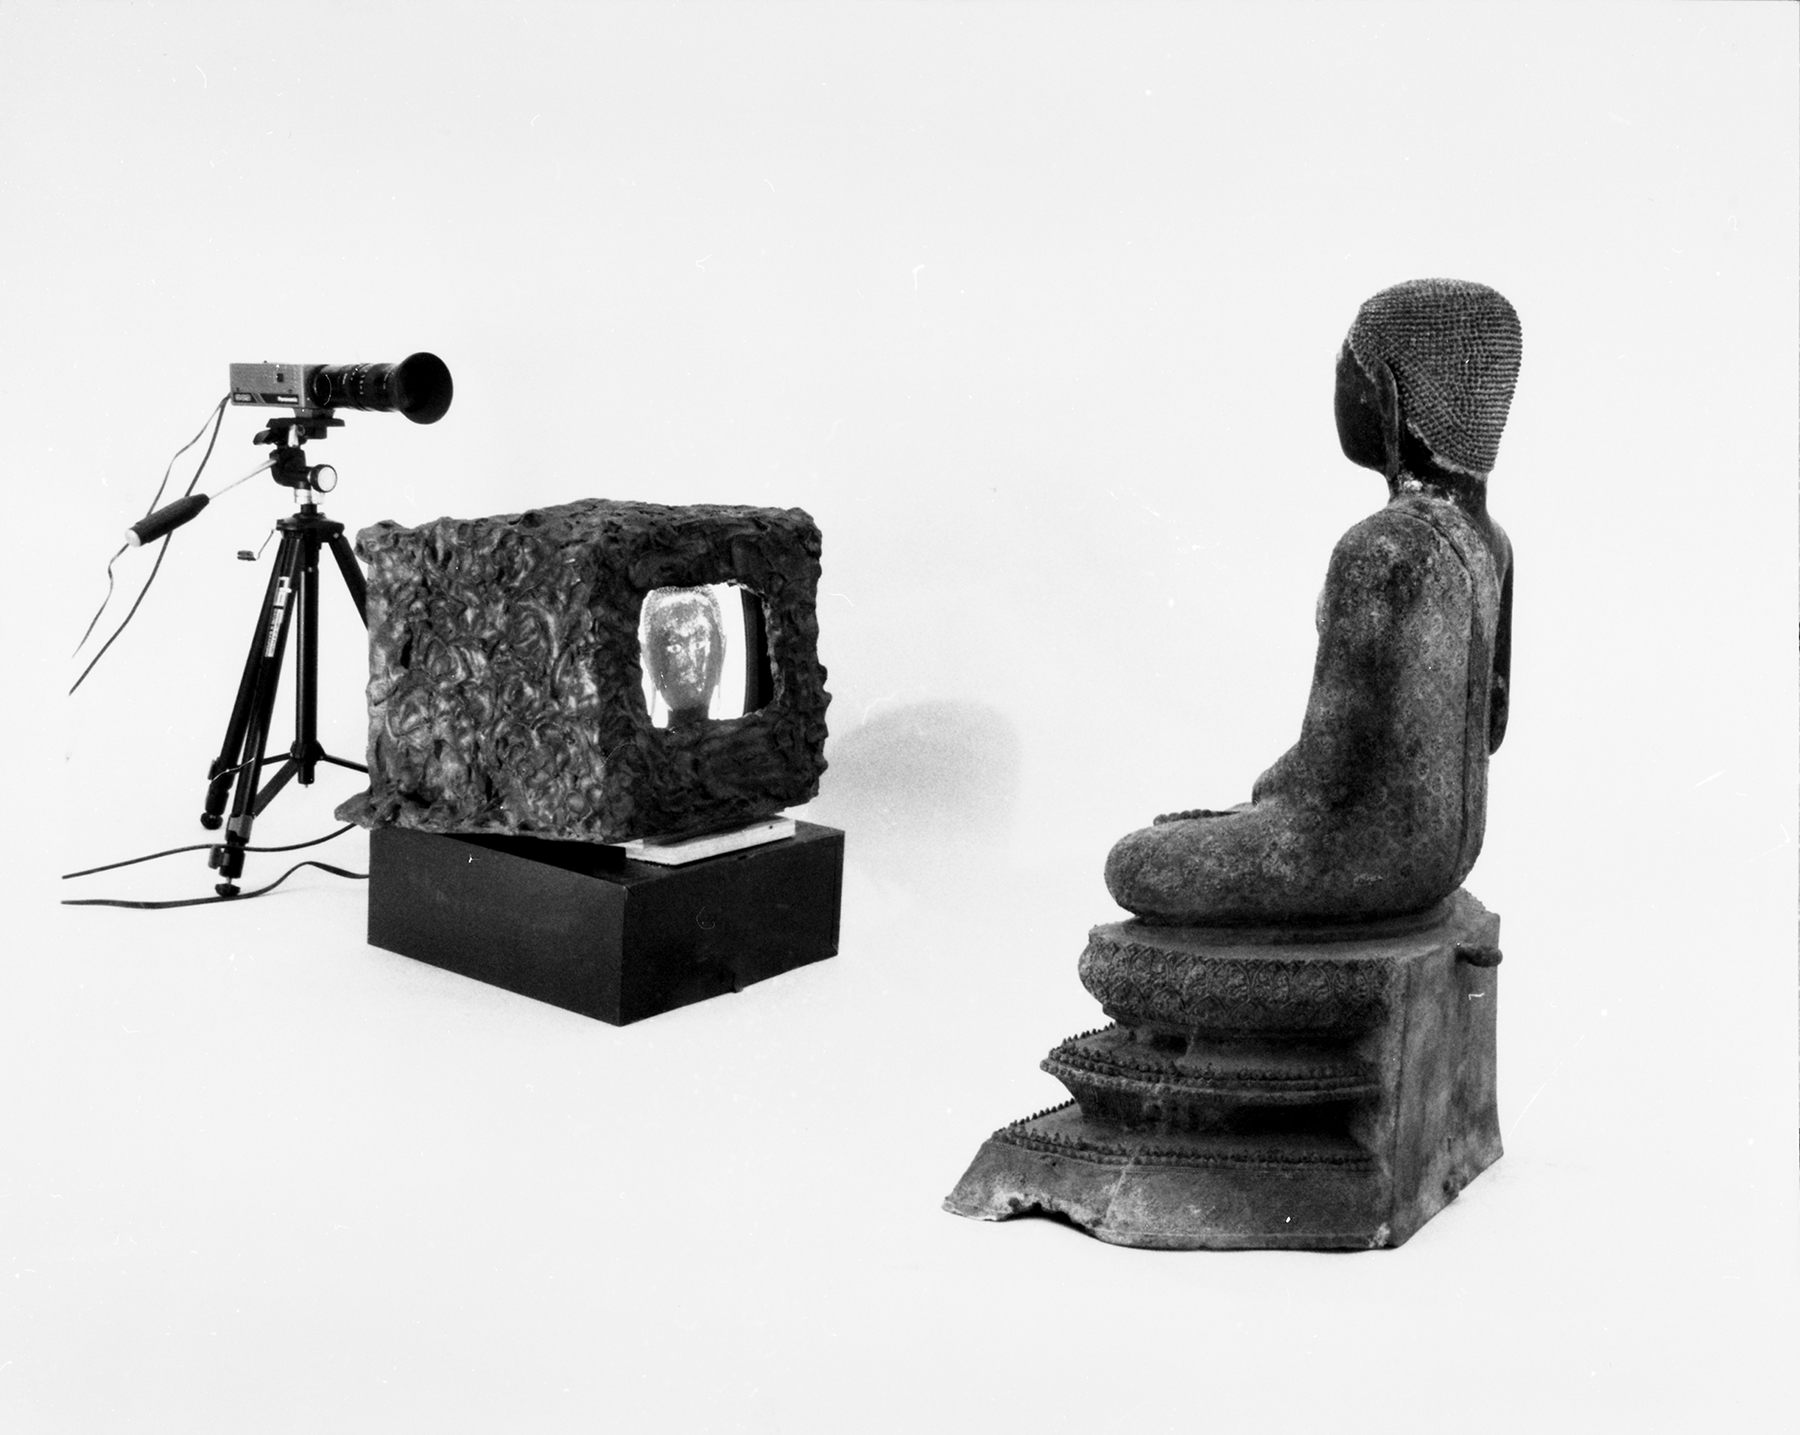 Title: Nam June Paik, TV-Buddha, 1989 | Author: Nam June Paik | Source: Biennale of Sydney | License: CC BY-NC-ND 2.0